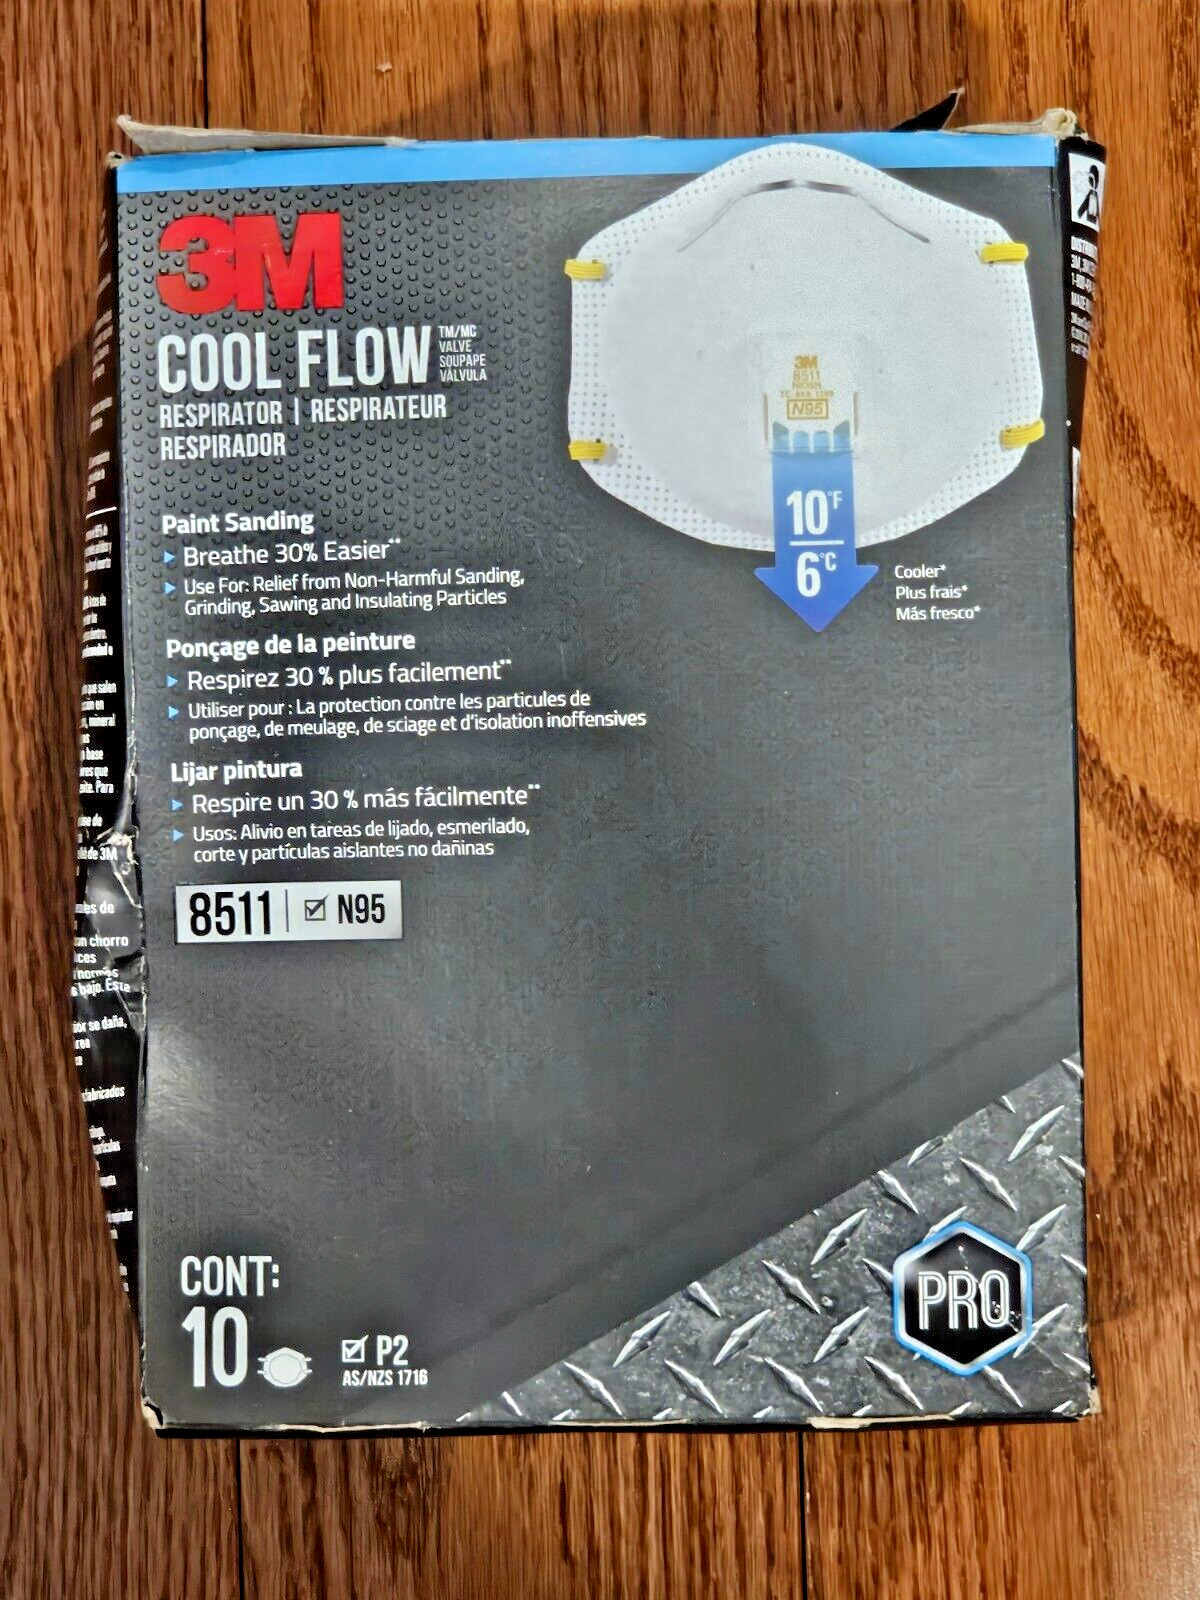 3M Cool Flow Respirator 10 Pack PRO